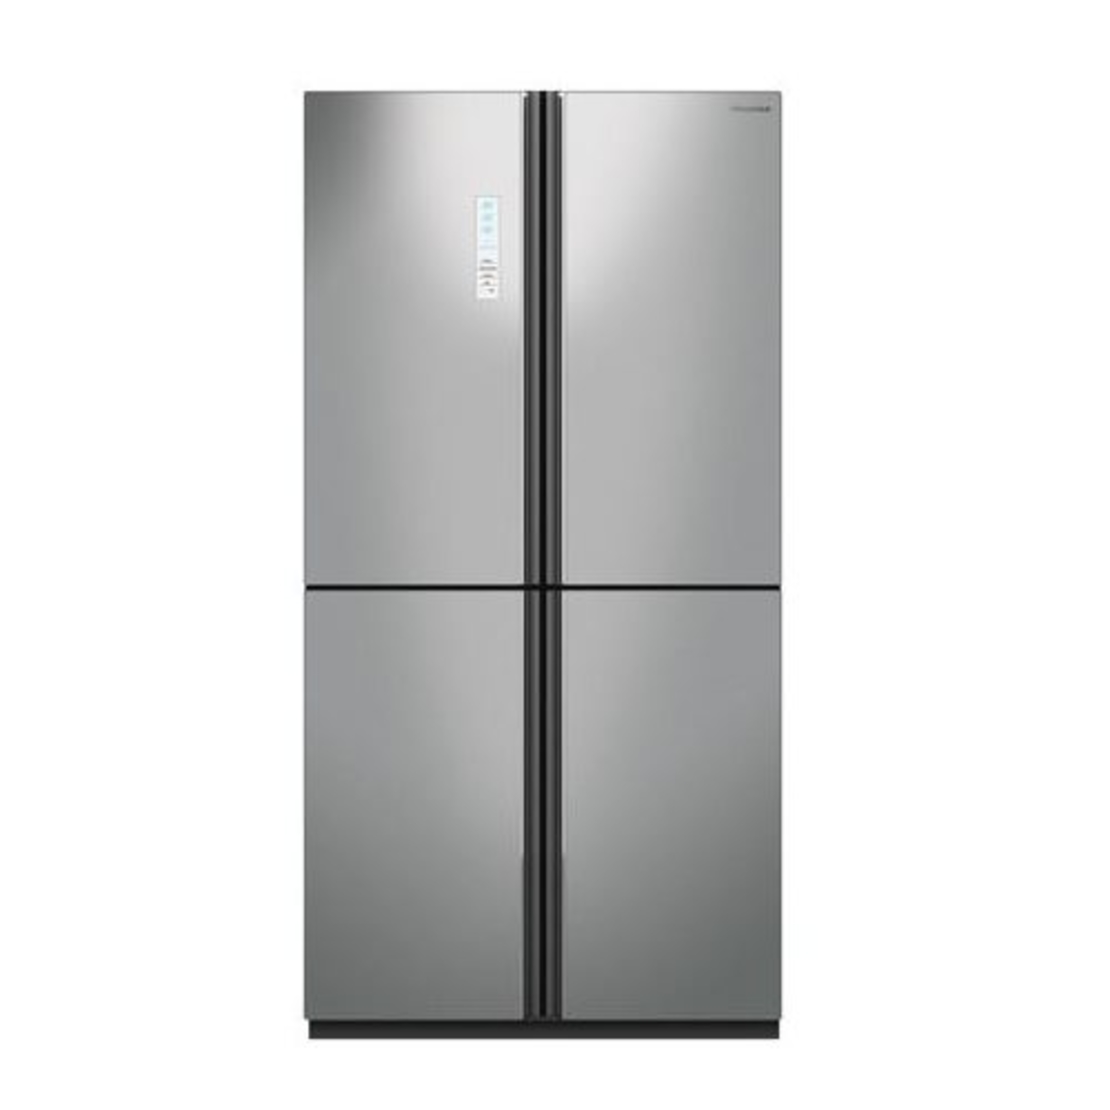 HISENSE RQ81WC4S 4 door refrigerator